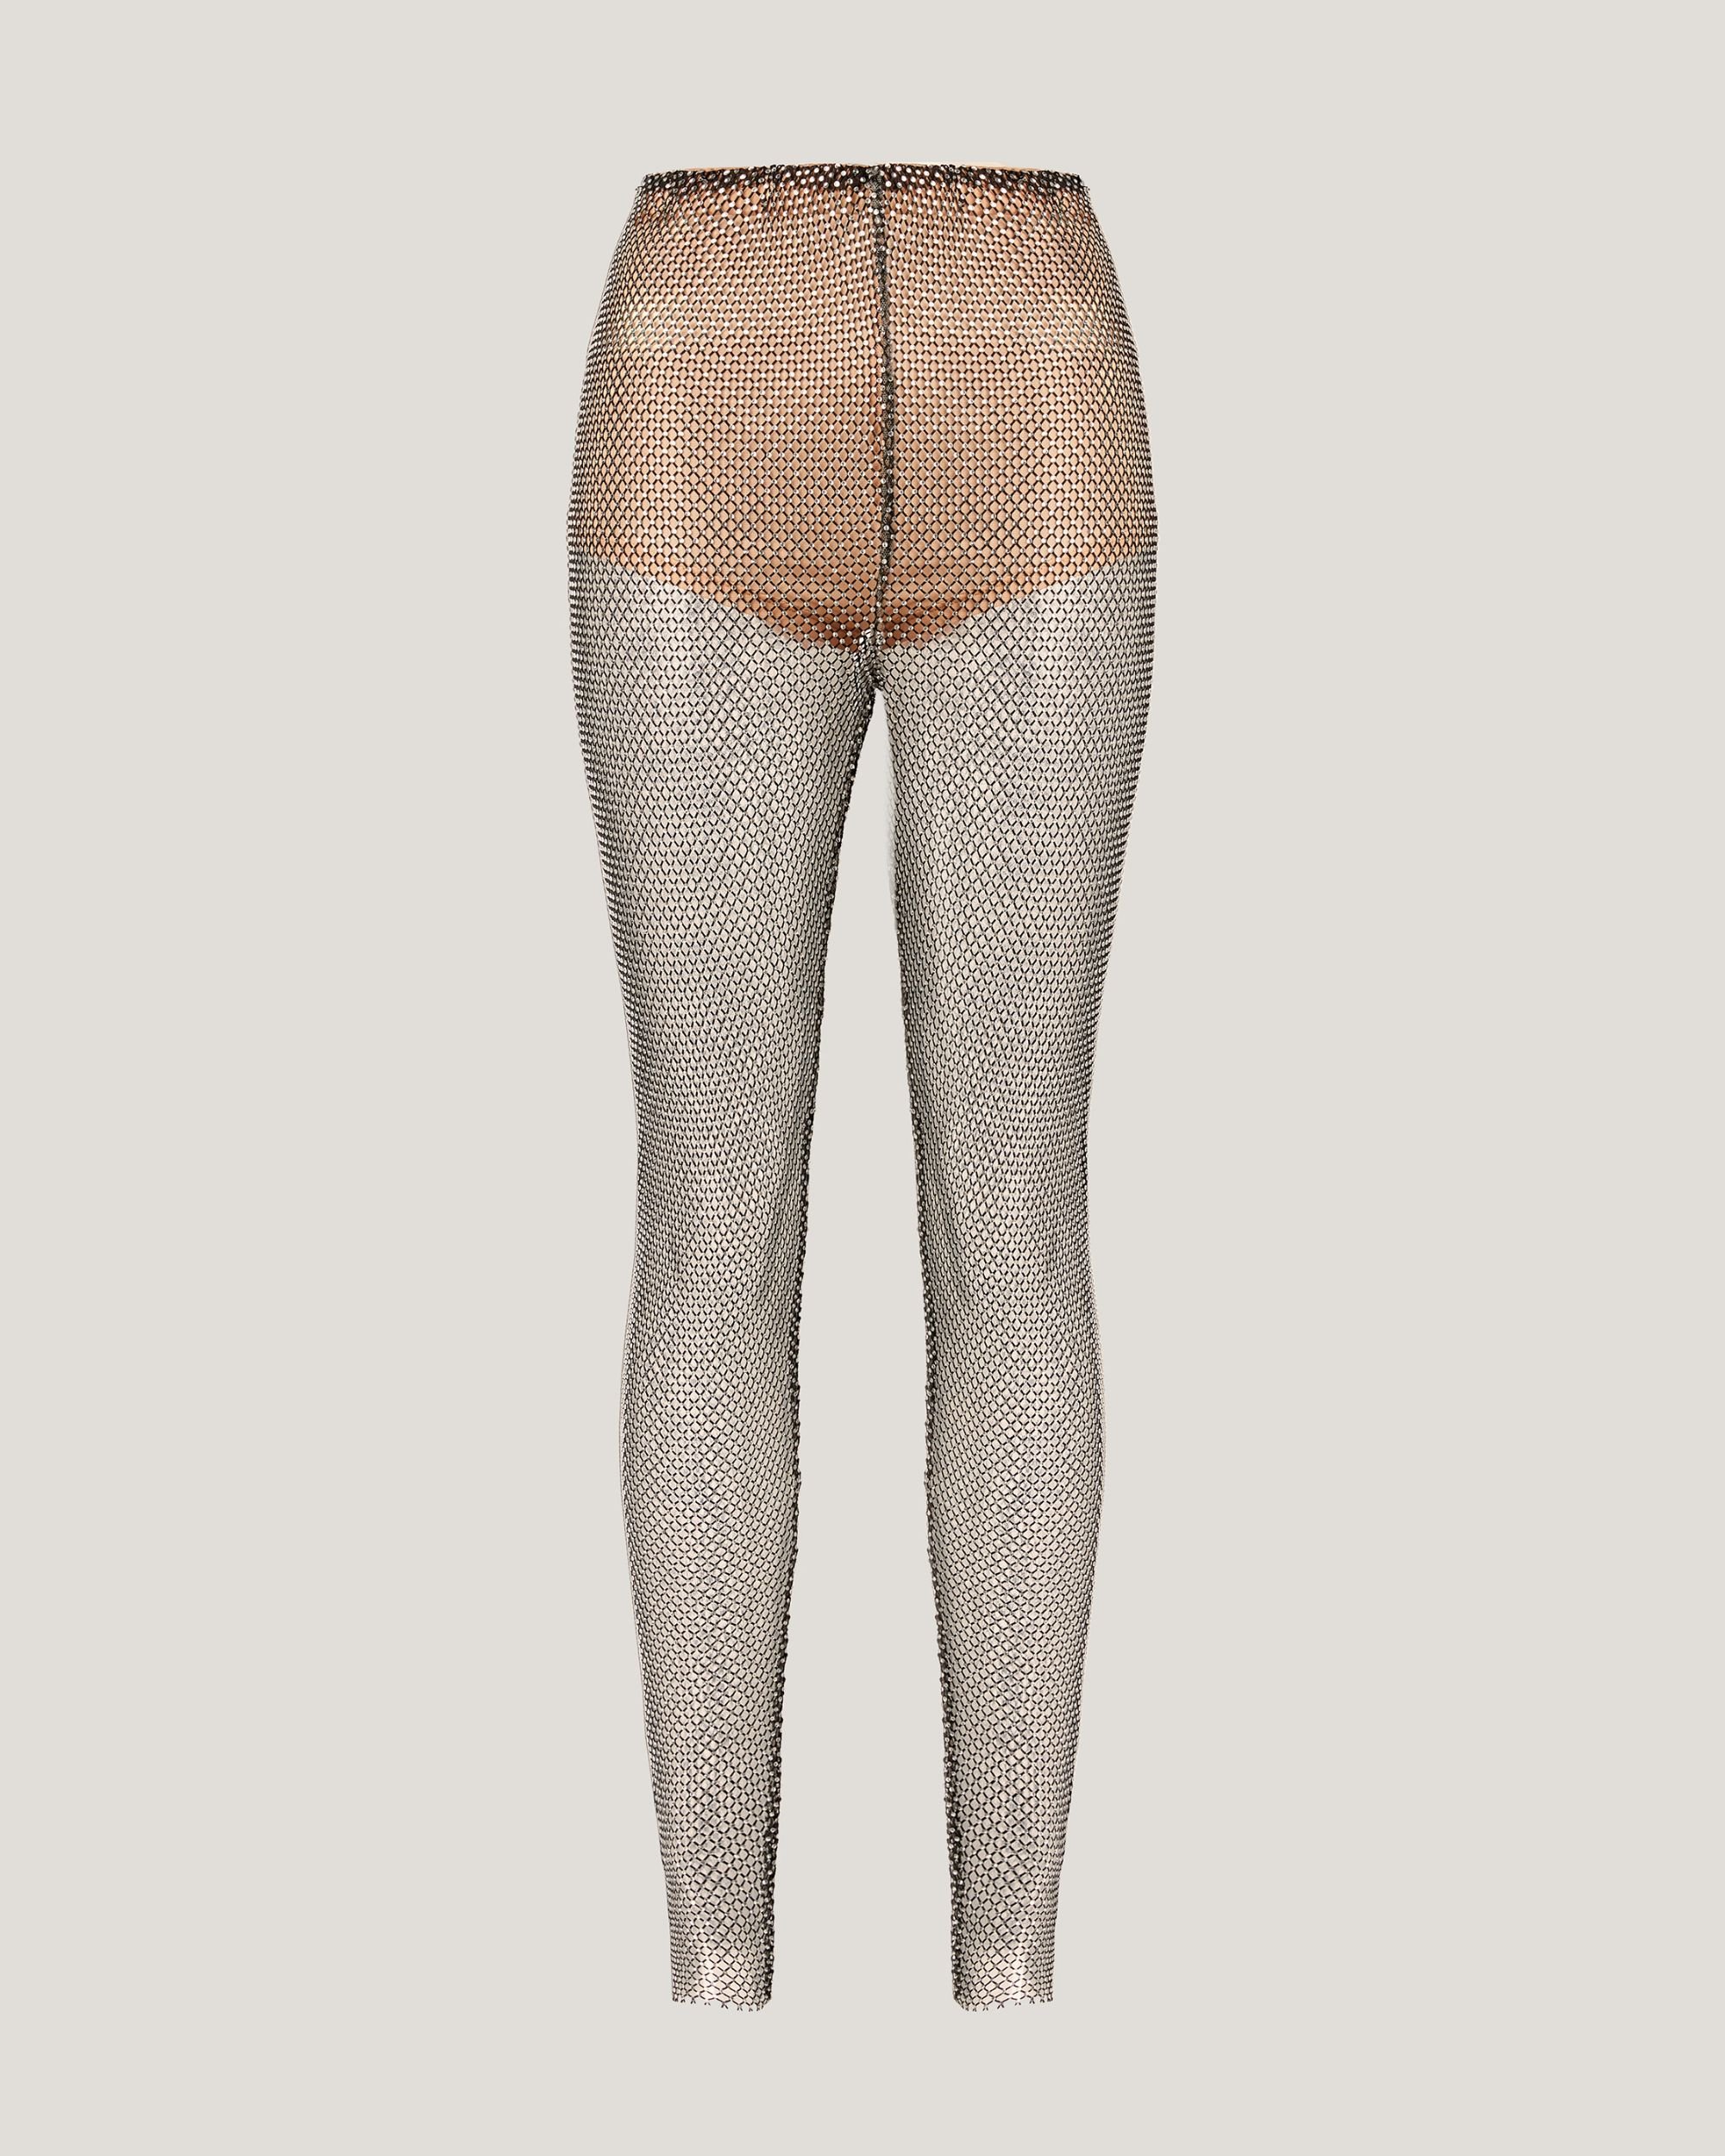 Buy TENDSY Fishnet Women's Sexy Black Net Pattern Pantyhose at Amazon.in